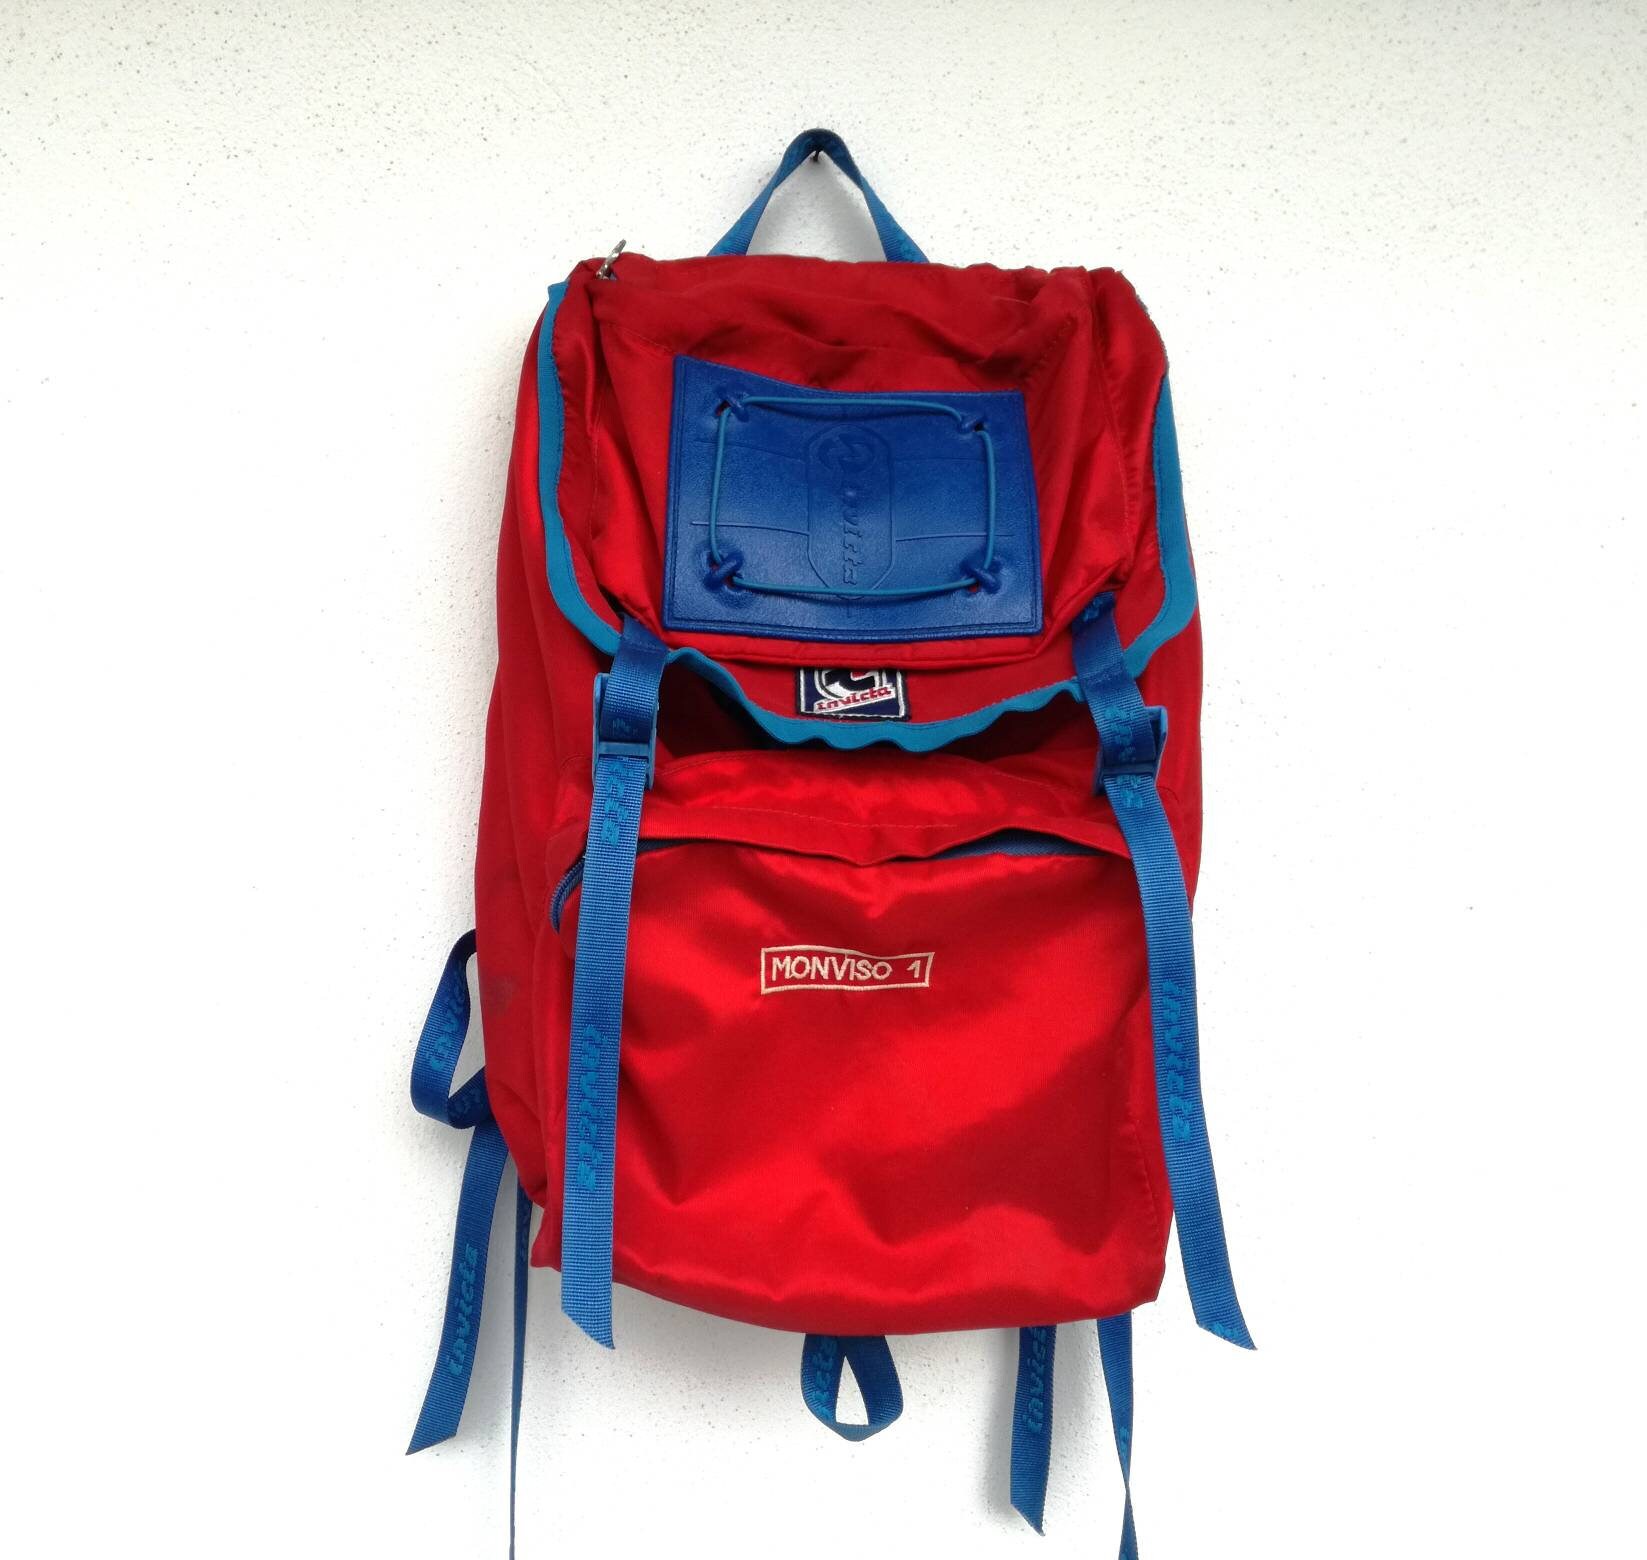 Invicta Monvisio 1 Very Rare Trekking Backpack Made in Italy - Etsy